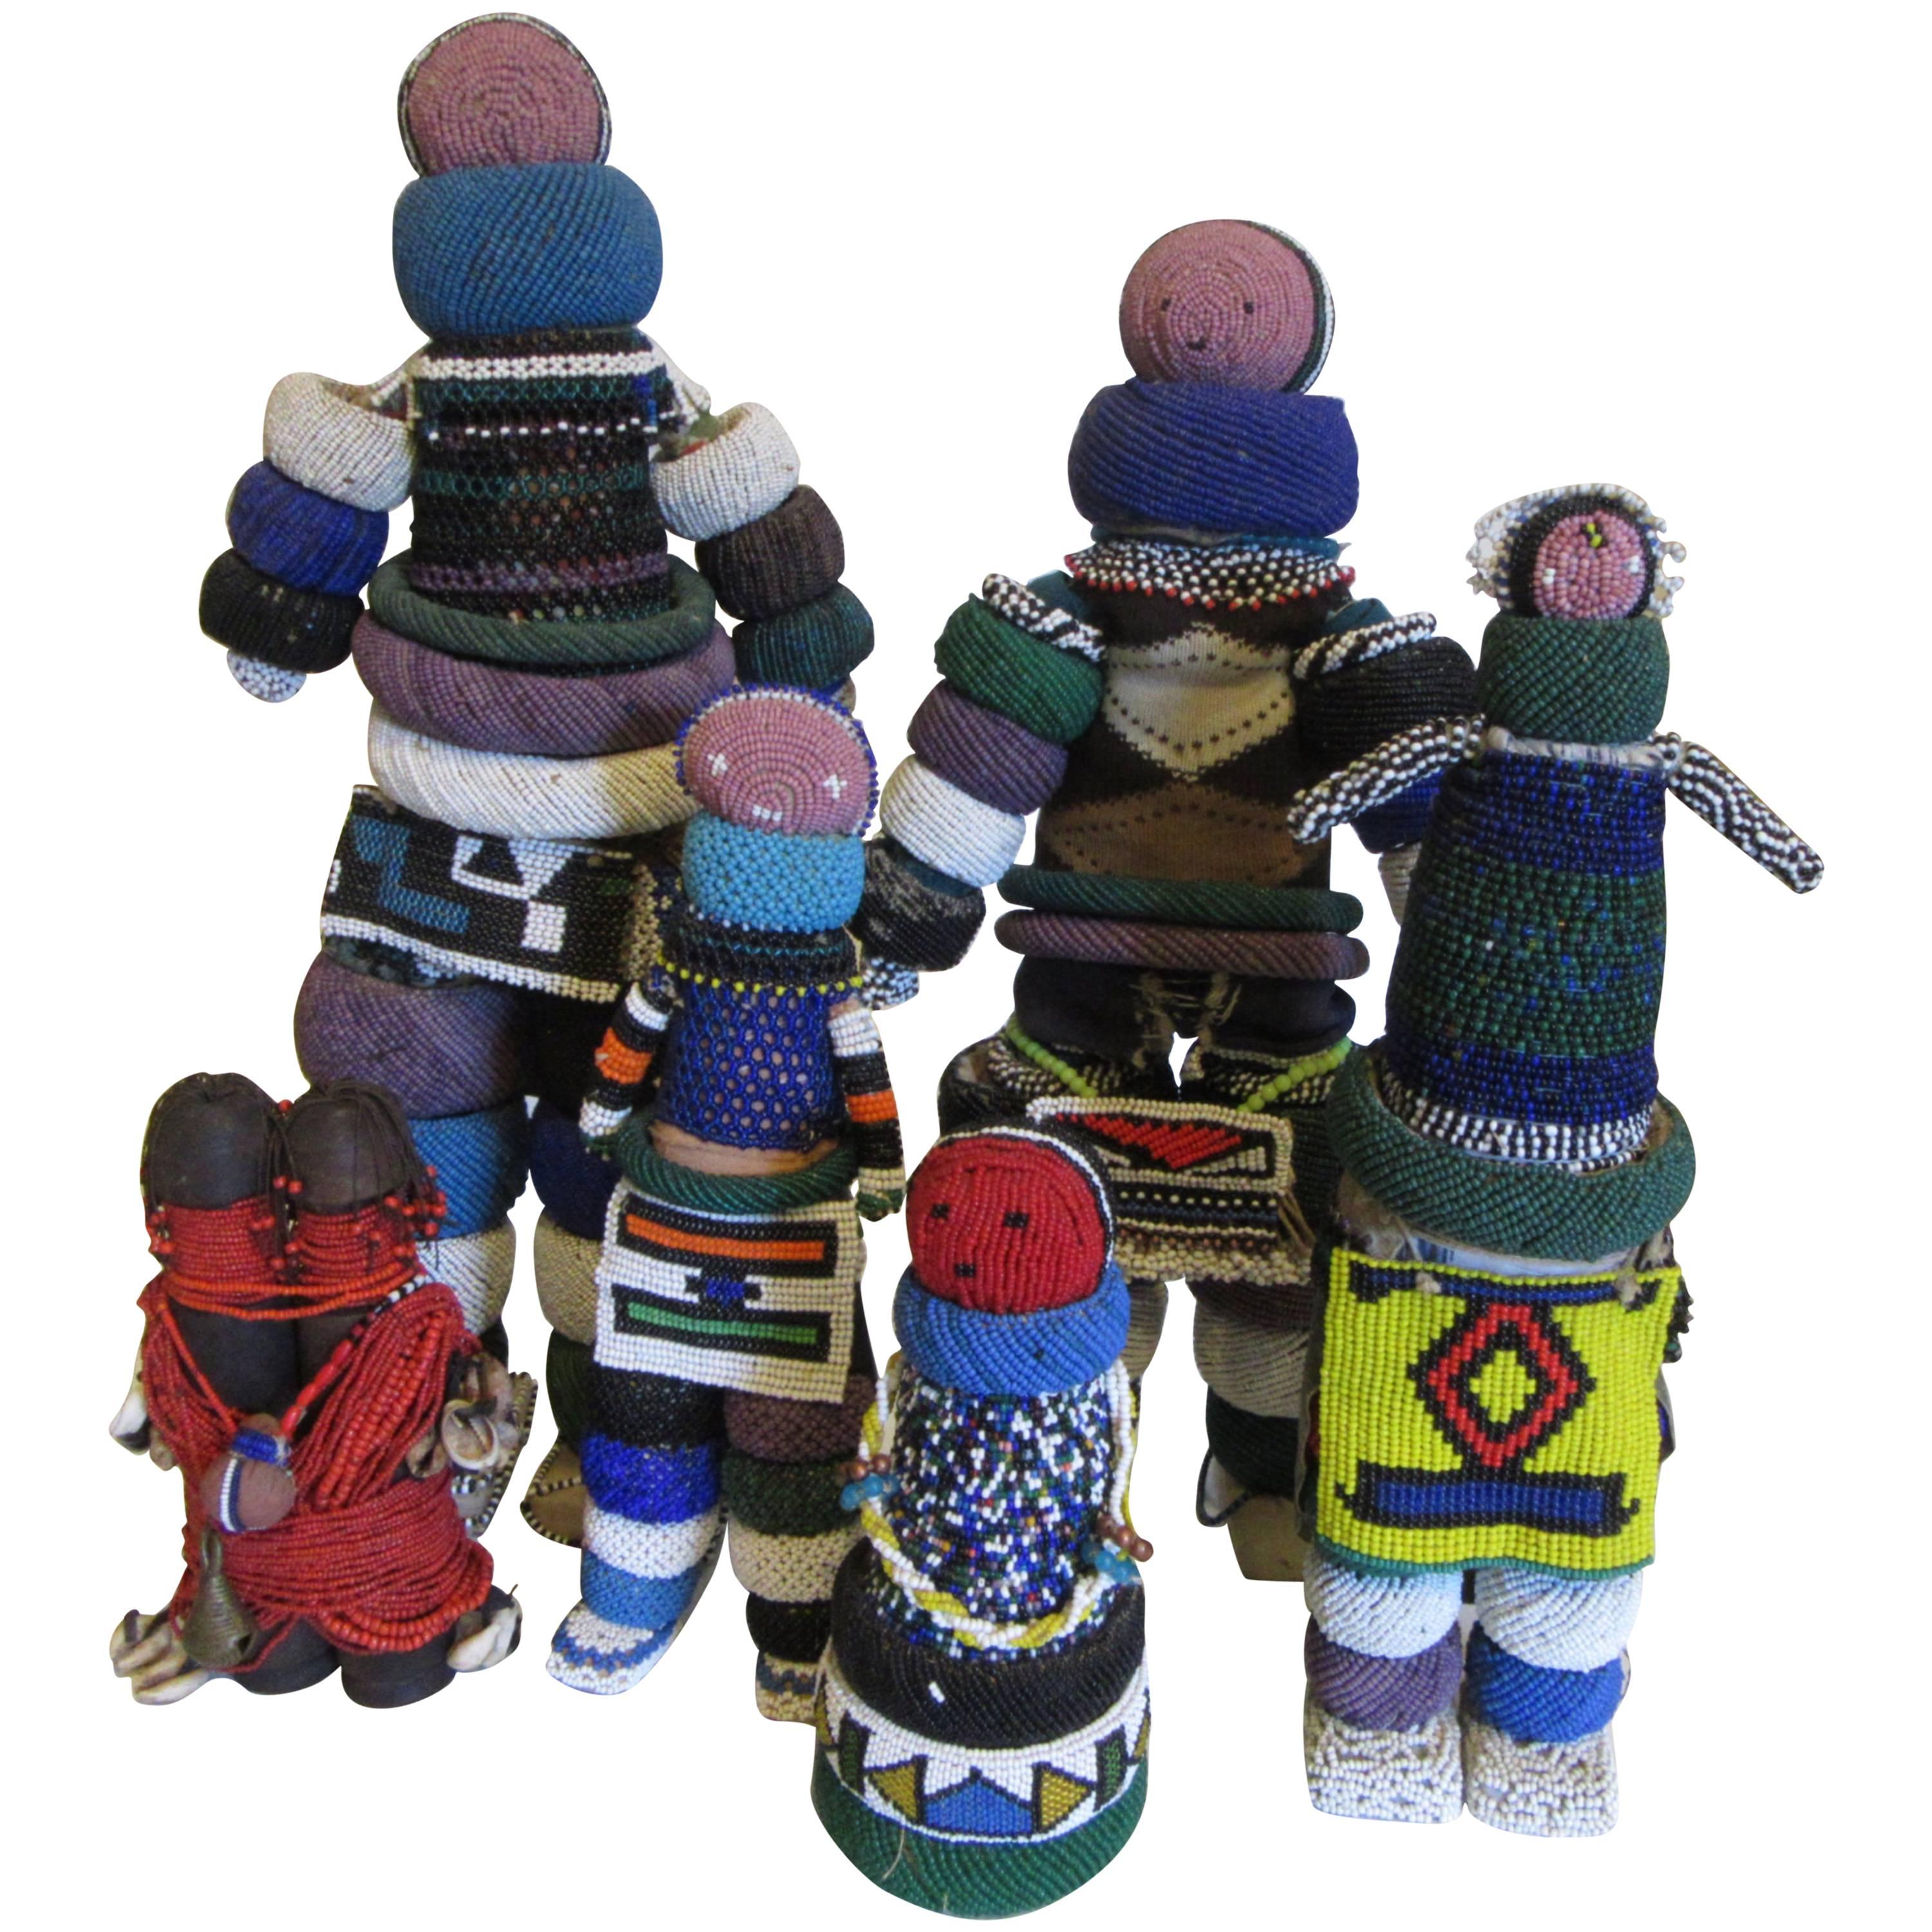 Kollektion von Ndebele-Filzility-Puppen